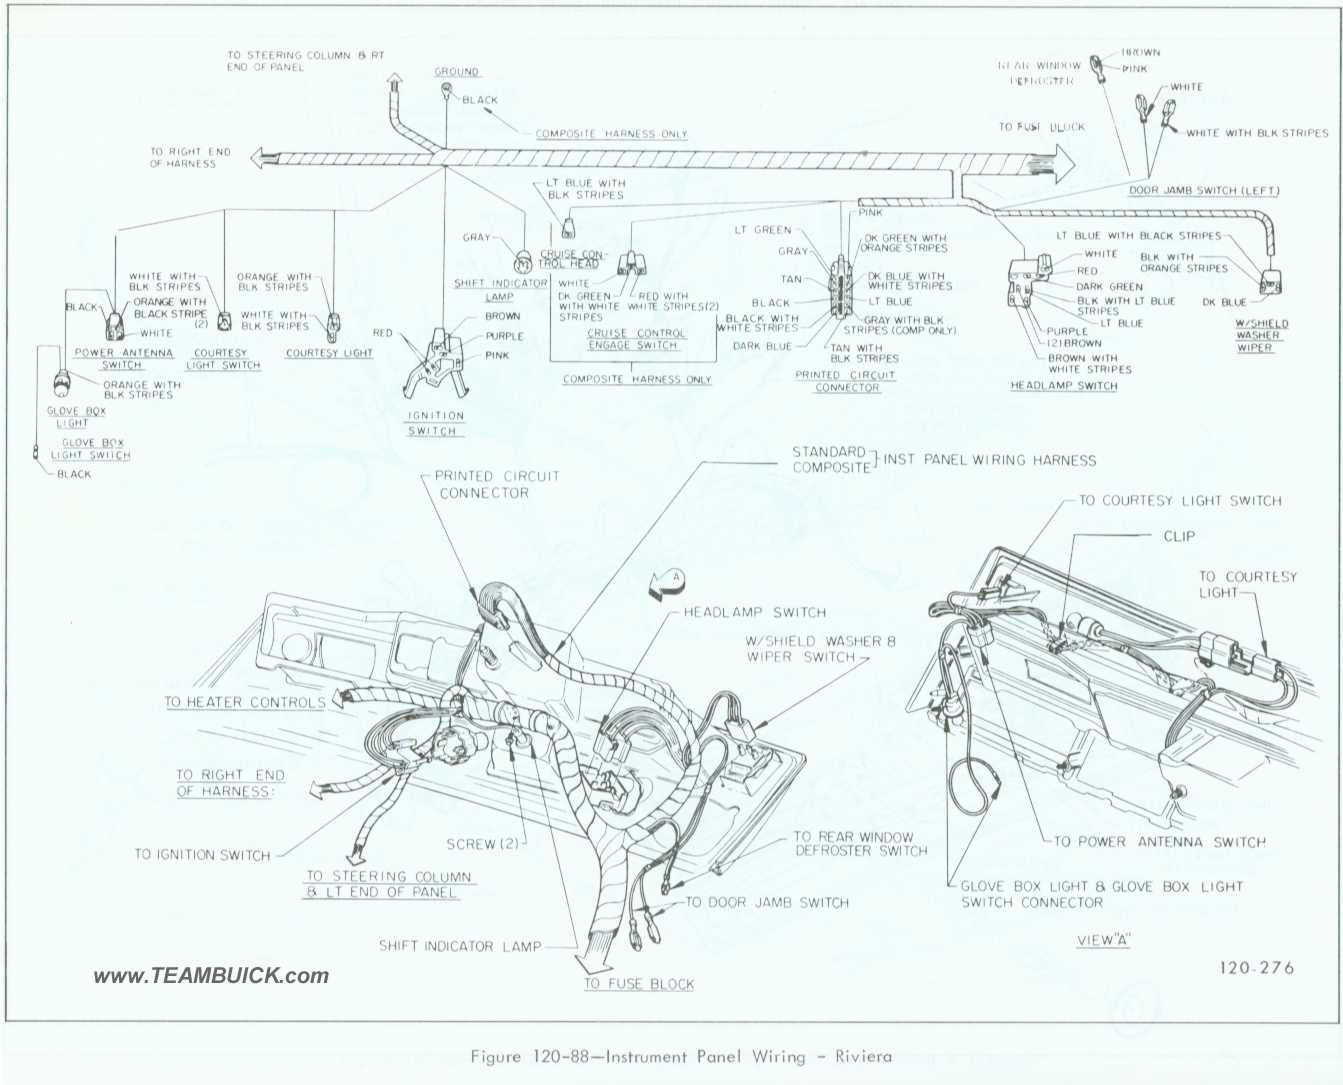 1967 Buick Riviera, Instrument Panel Wiring